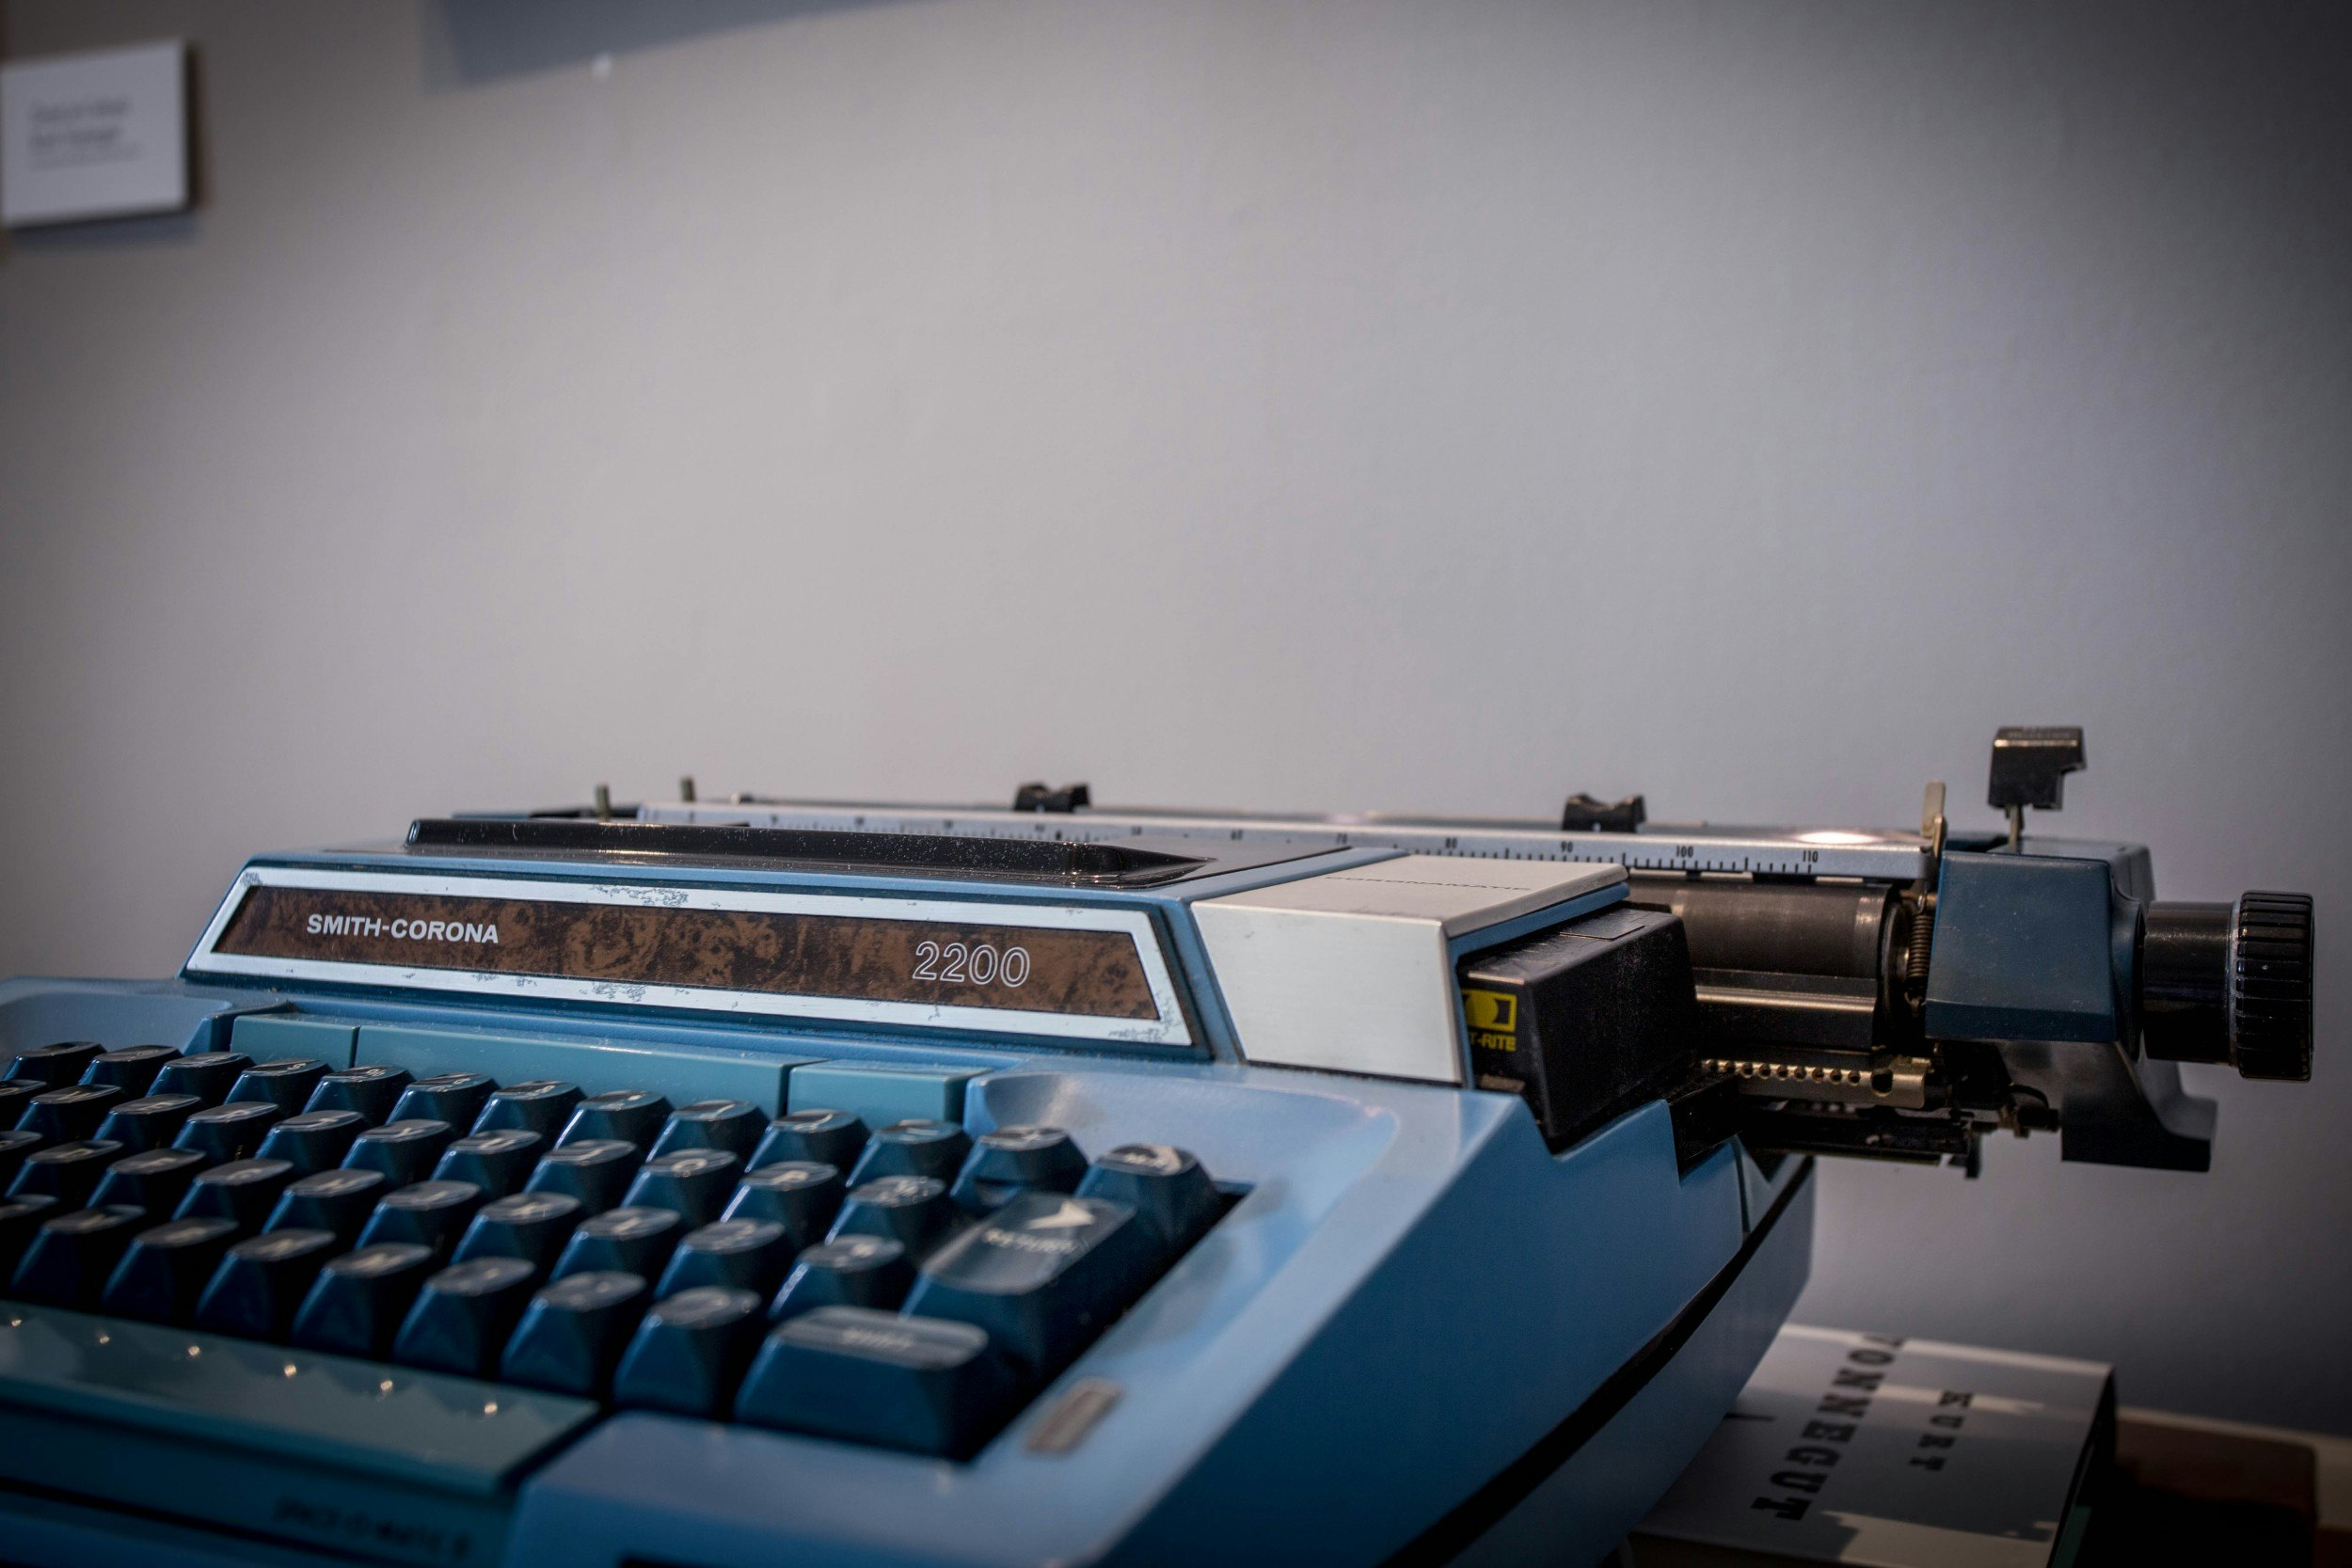 Kurt Vonnegut's blue typewriter on a table